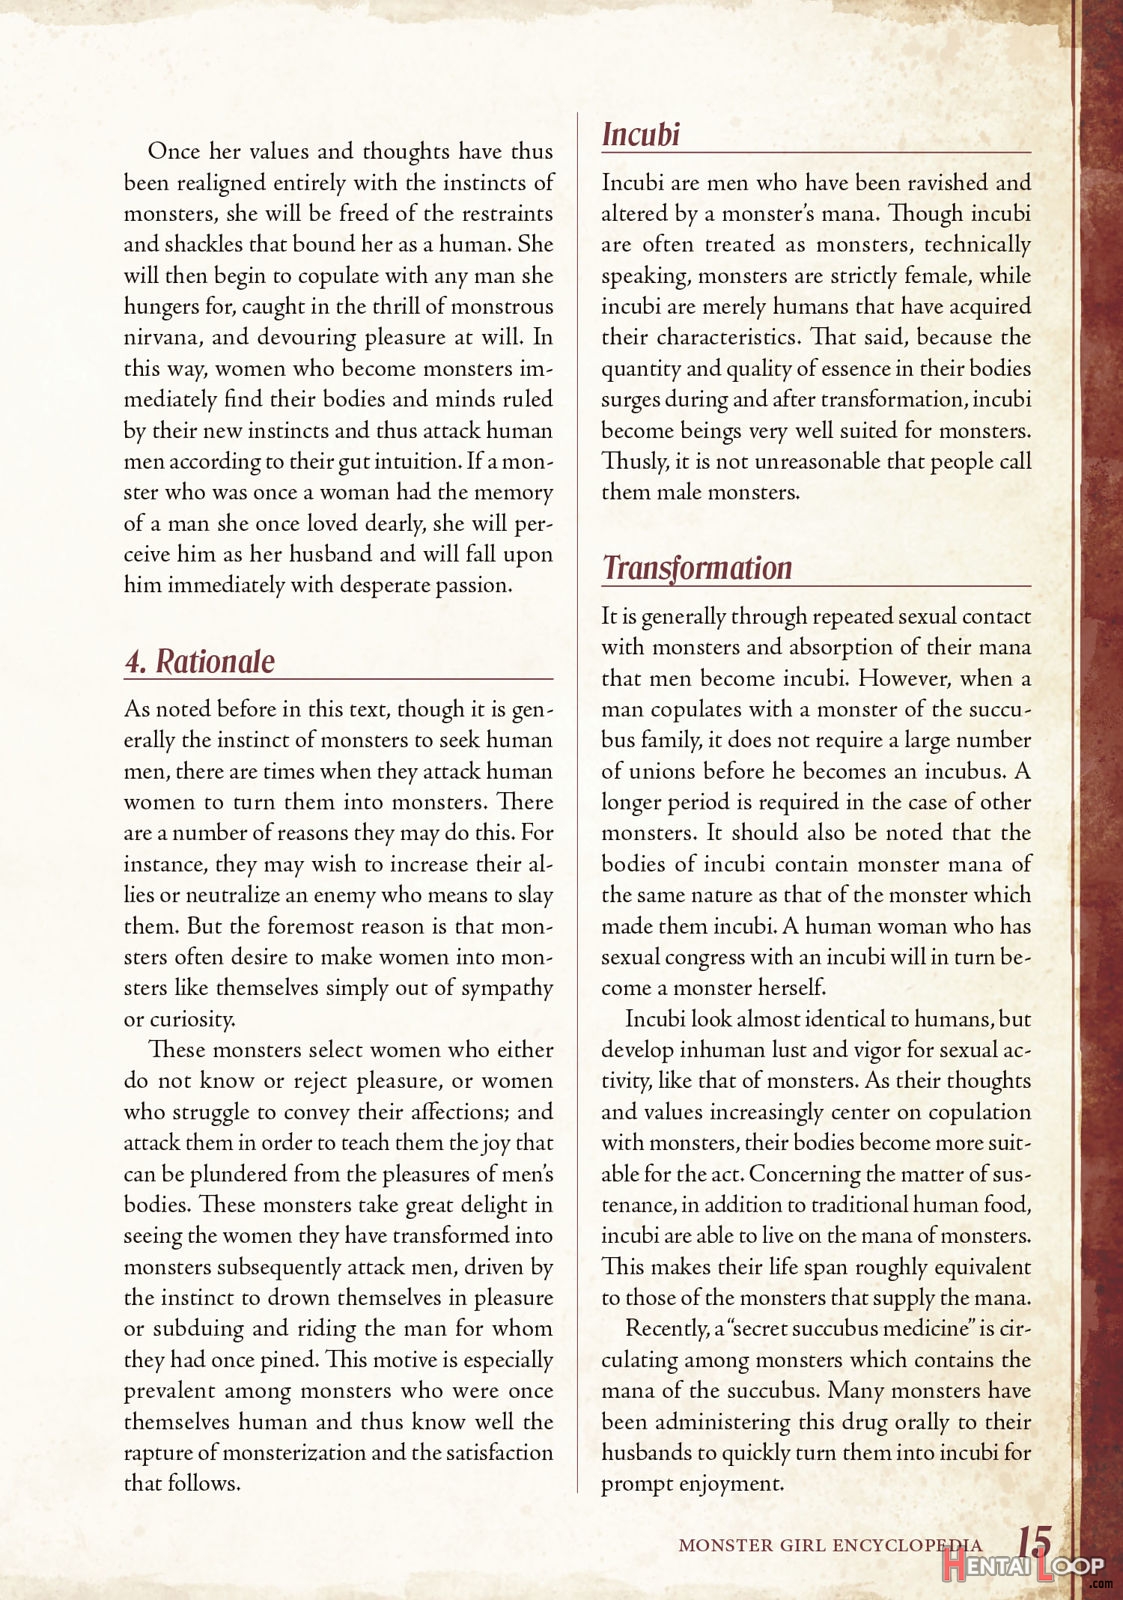 Monster Girl Encyclopedia Vol. 1 page 16